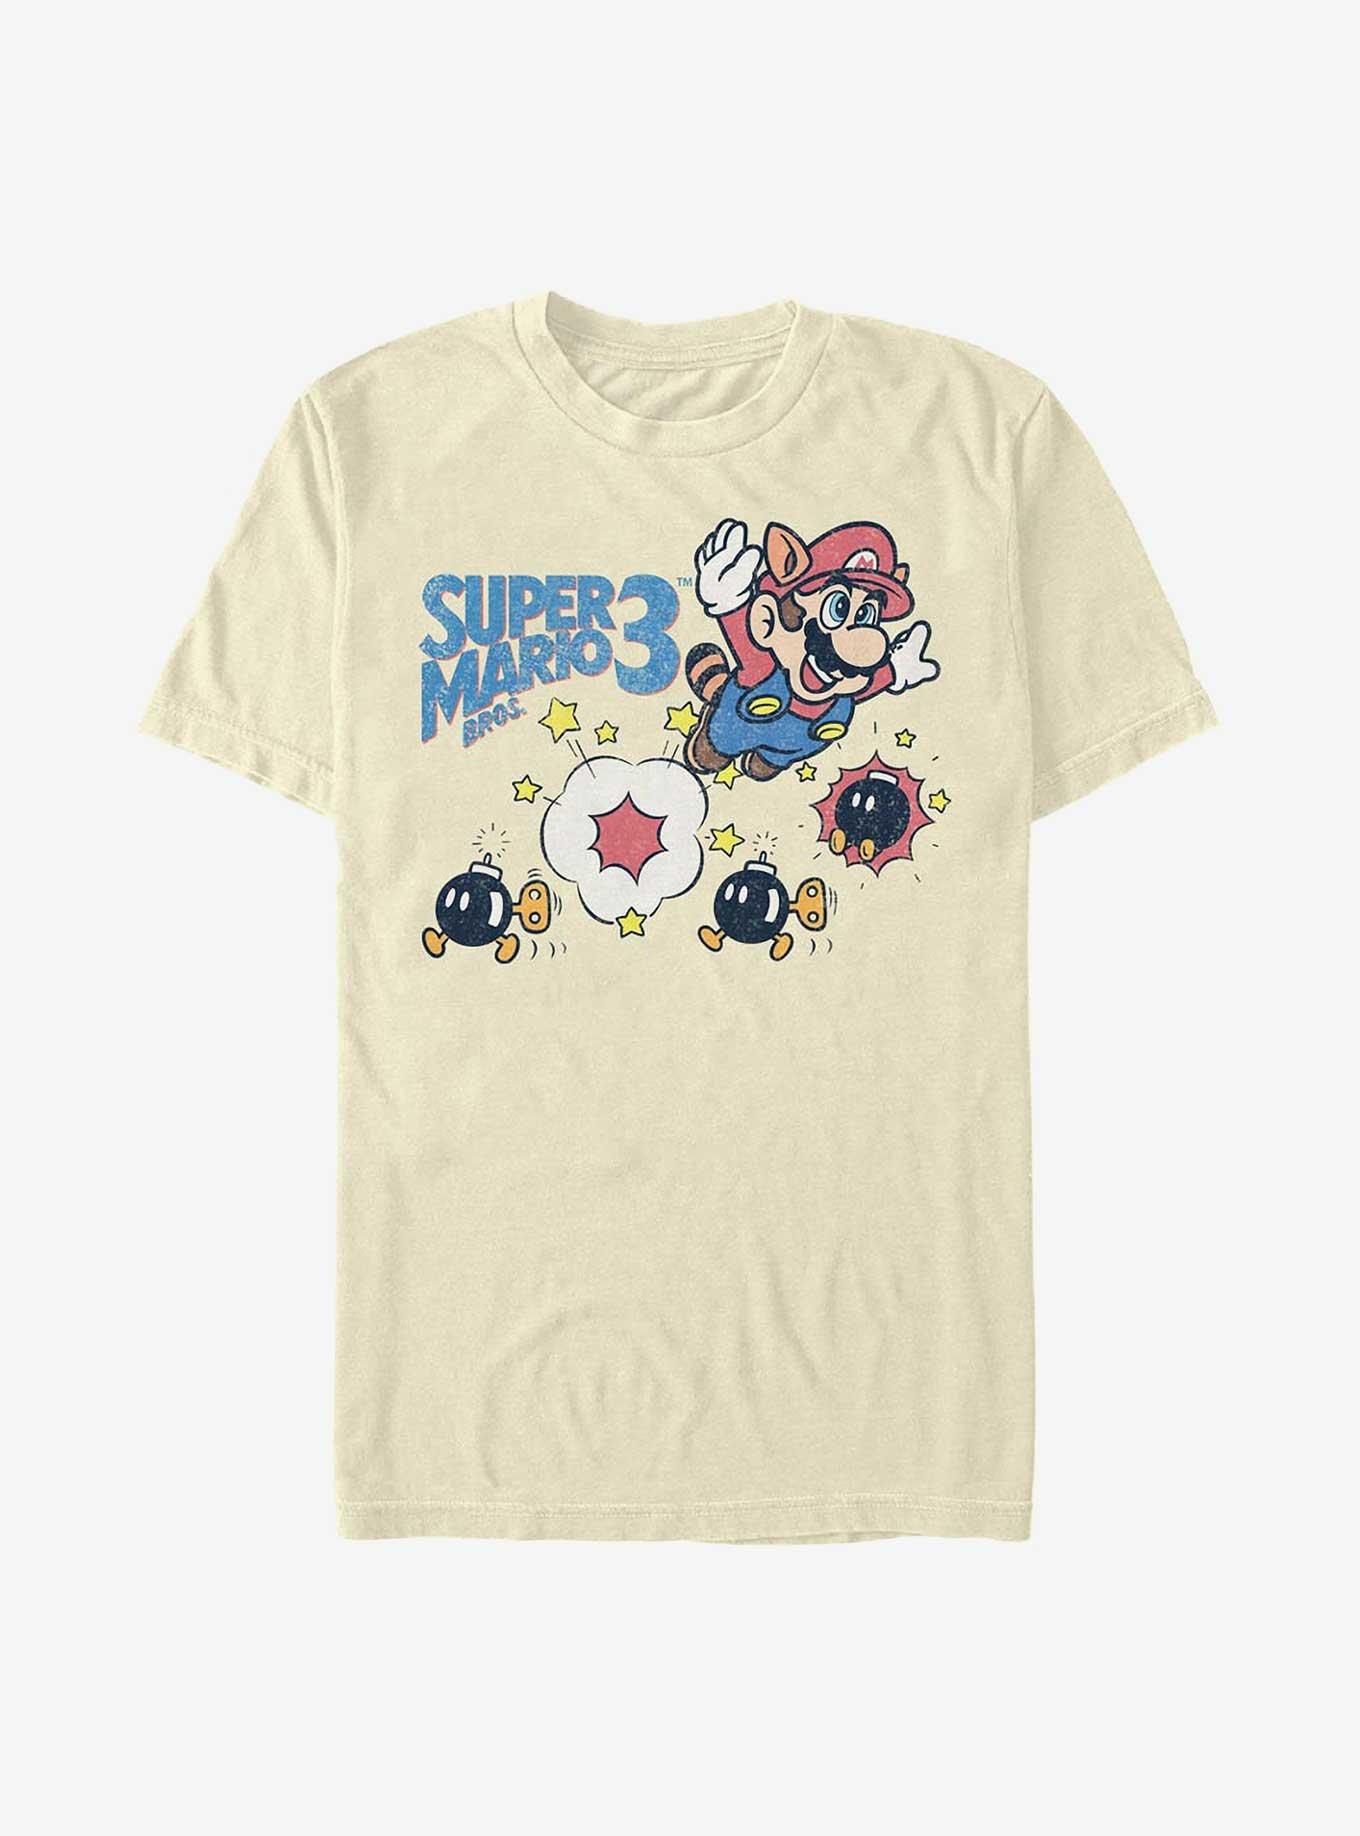 Nintendo Super Mario Bros 3 Retro T-Shirt